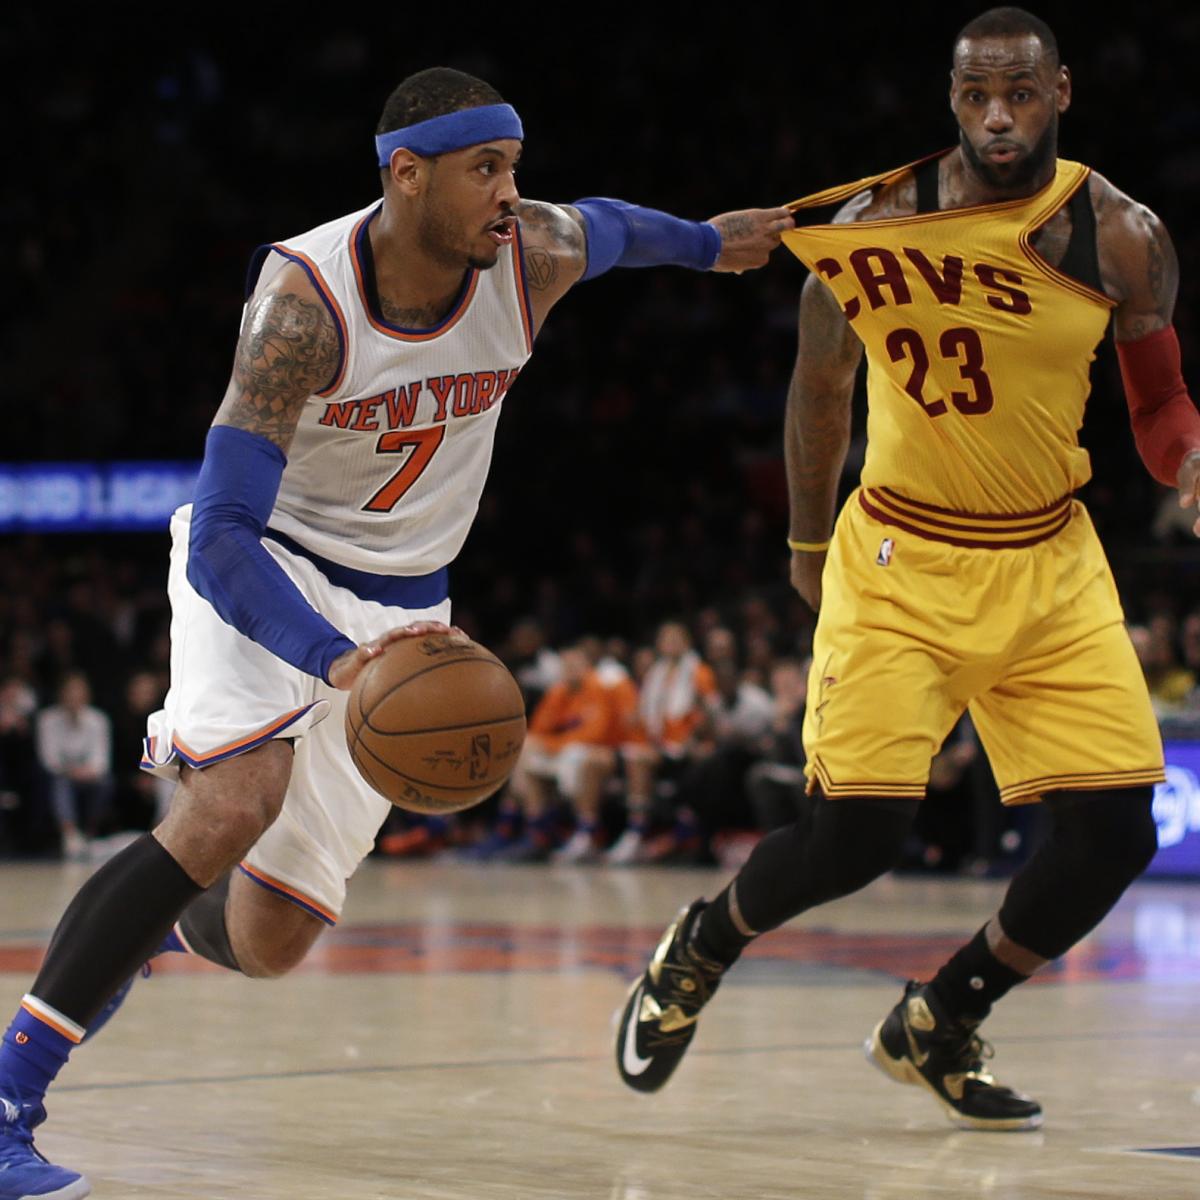 Report: NBA approves sponsor branding on player practice jerseys